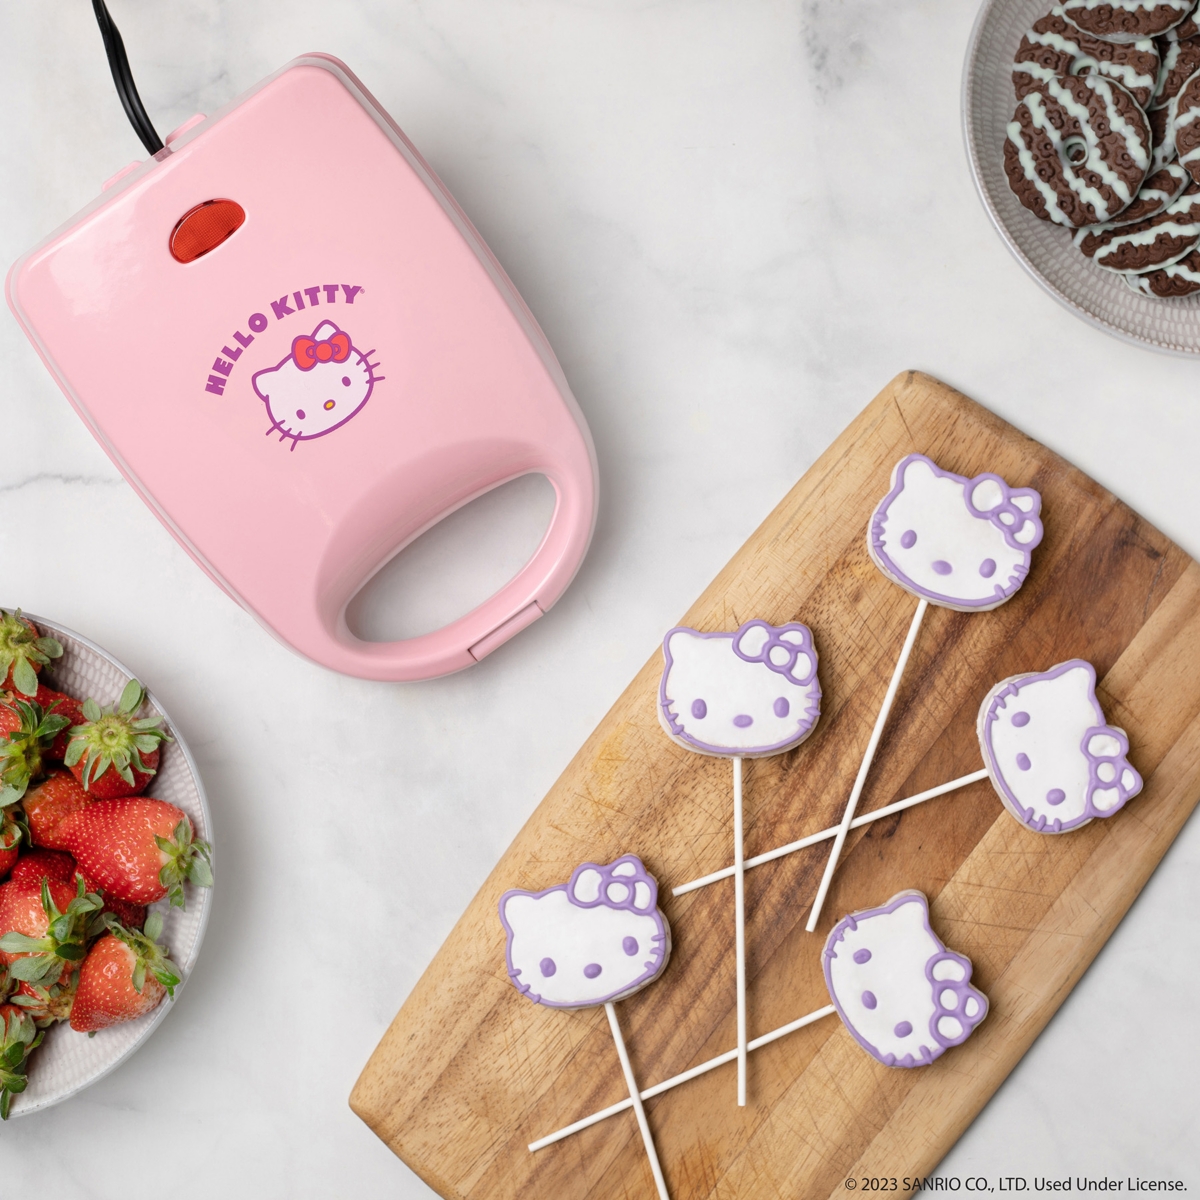 Uncanny Brands Hello Kitty Cake Pop Maker - Makes 4 Hello Kitty Cake Pops In Pink